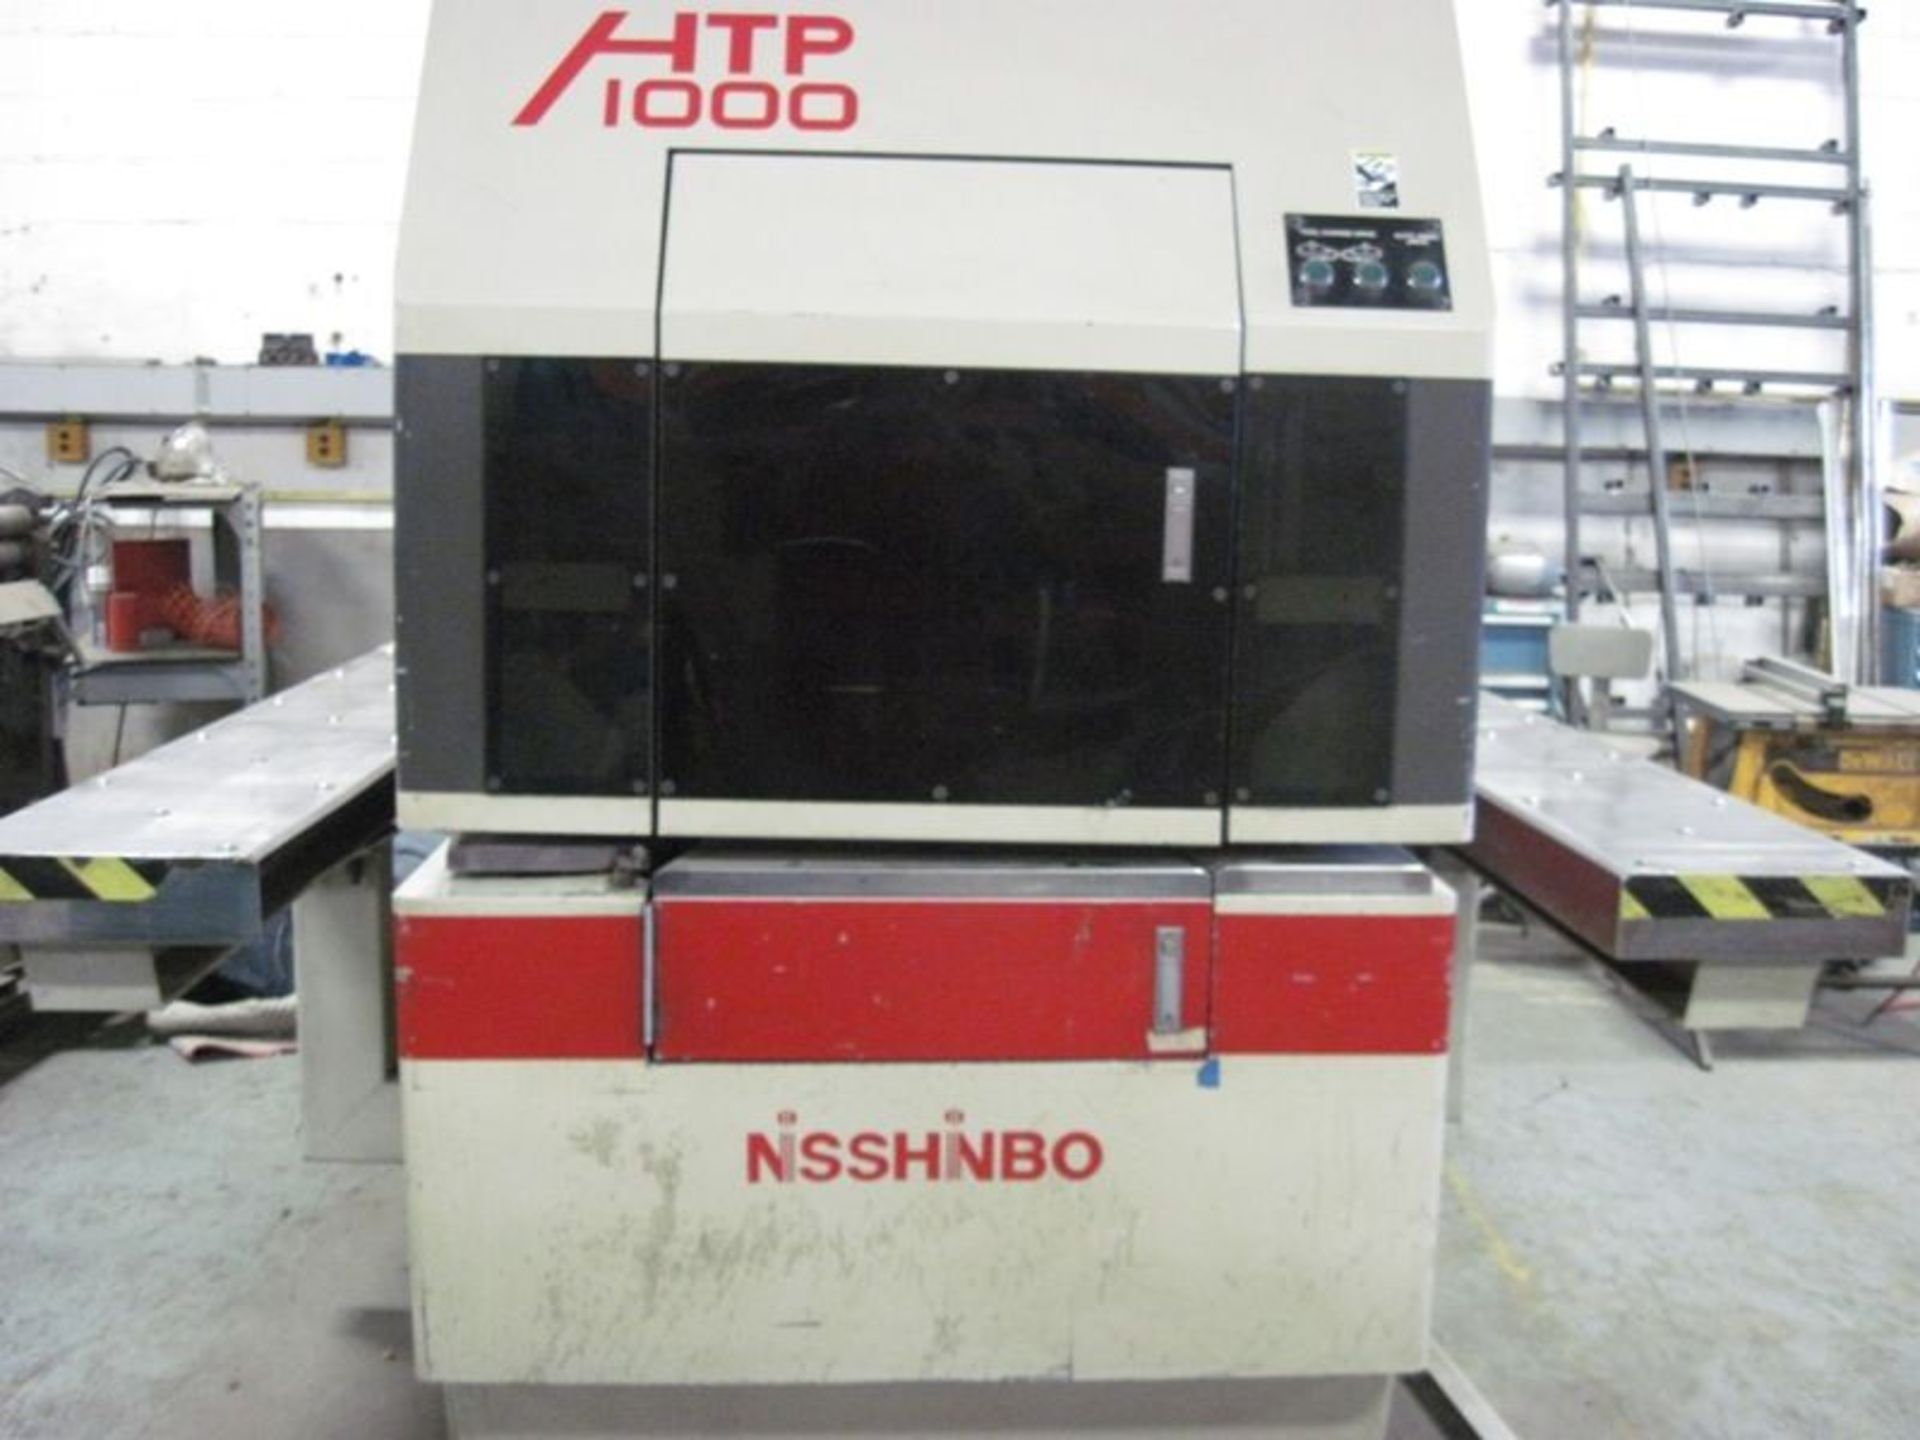 22 Tons 40"Thr Nisshinbo HTP-1000 CNC TURRET PUNCH